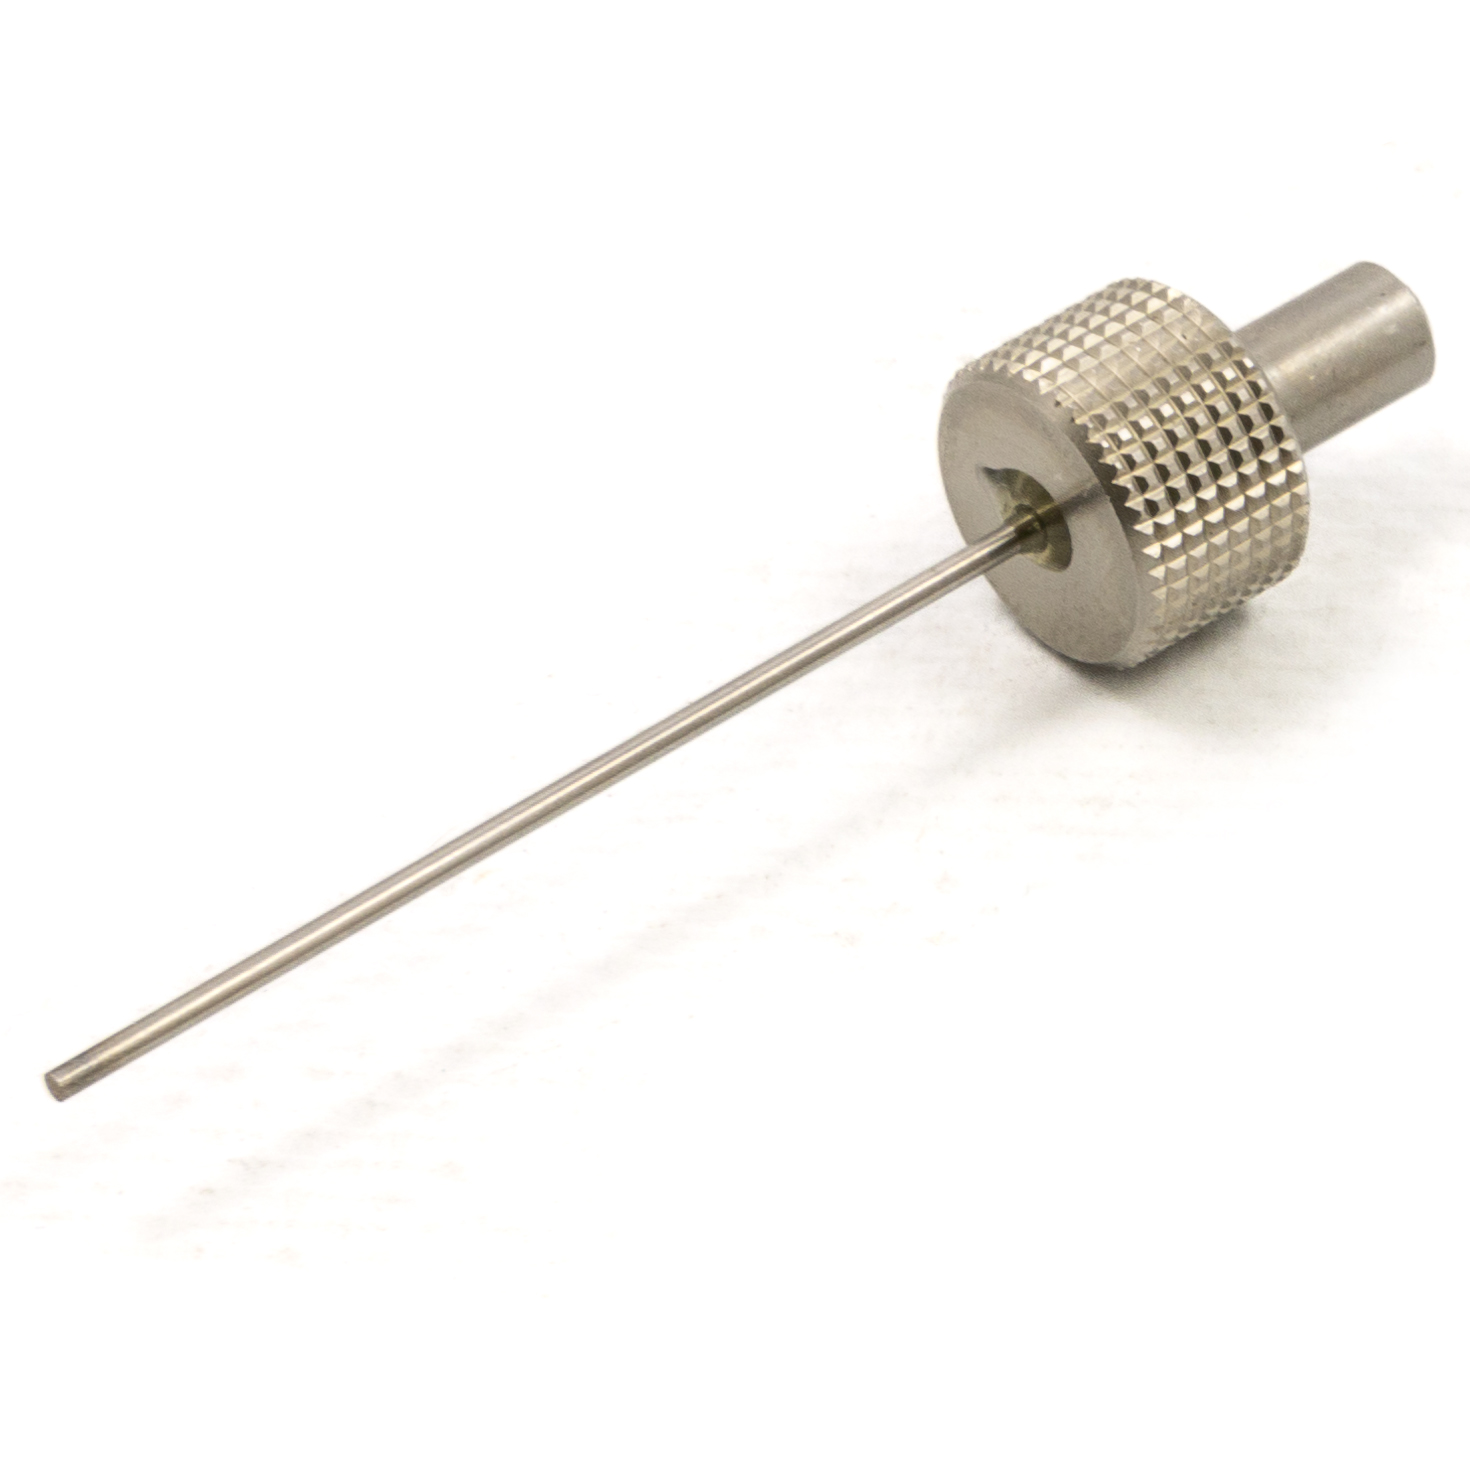 ABMB 1030613 Initial set needle Ø 1,13mm acc. to EN 196 for TESTING Vicat apparatus